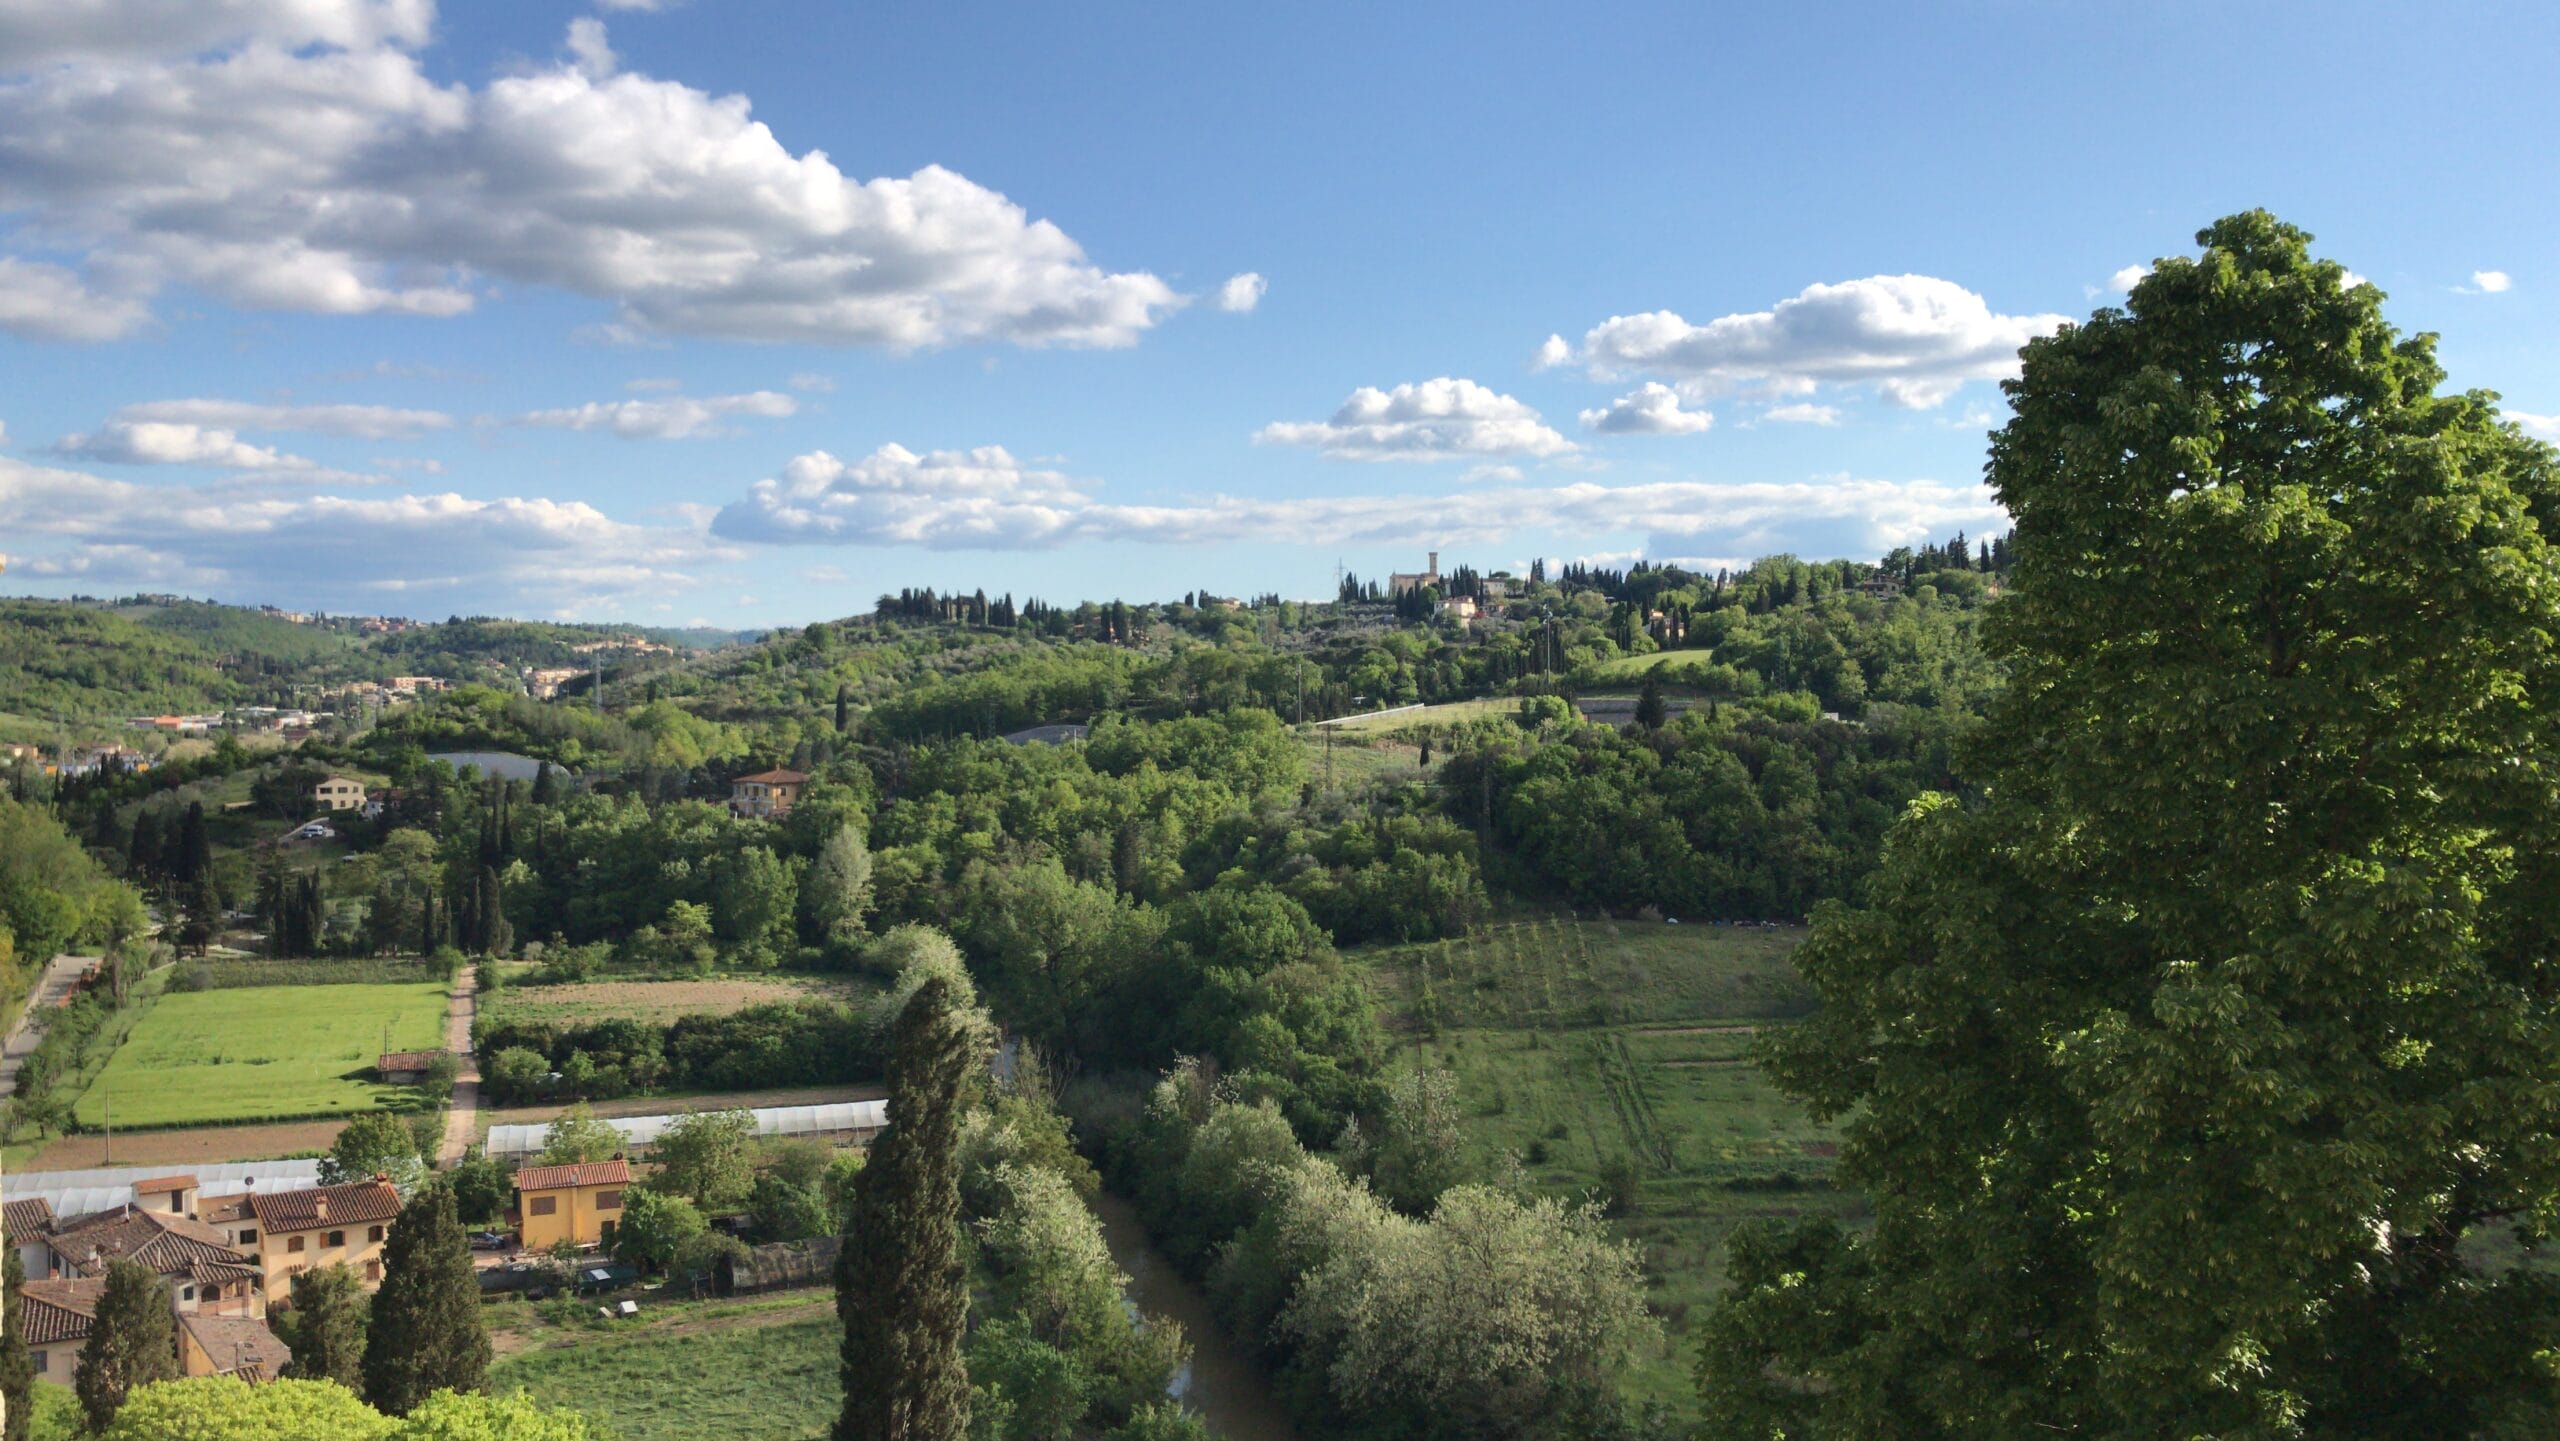 Turismo: Toscana regione più ‘clickata’ su web